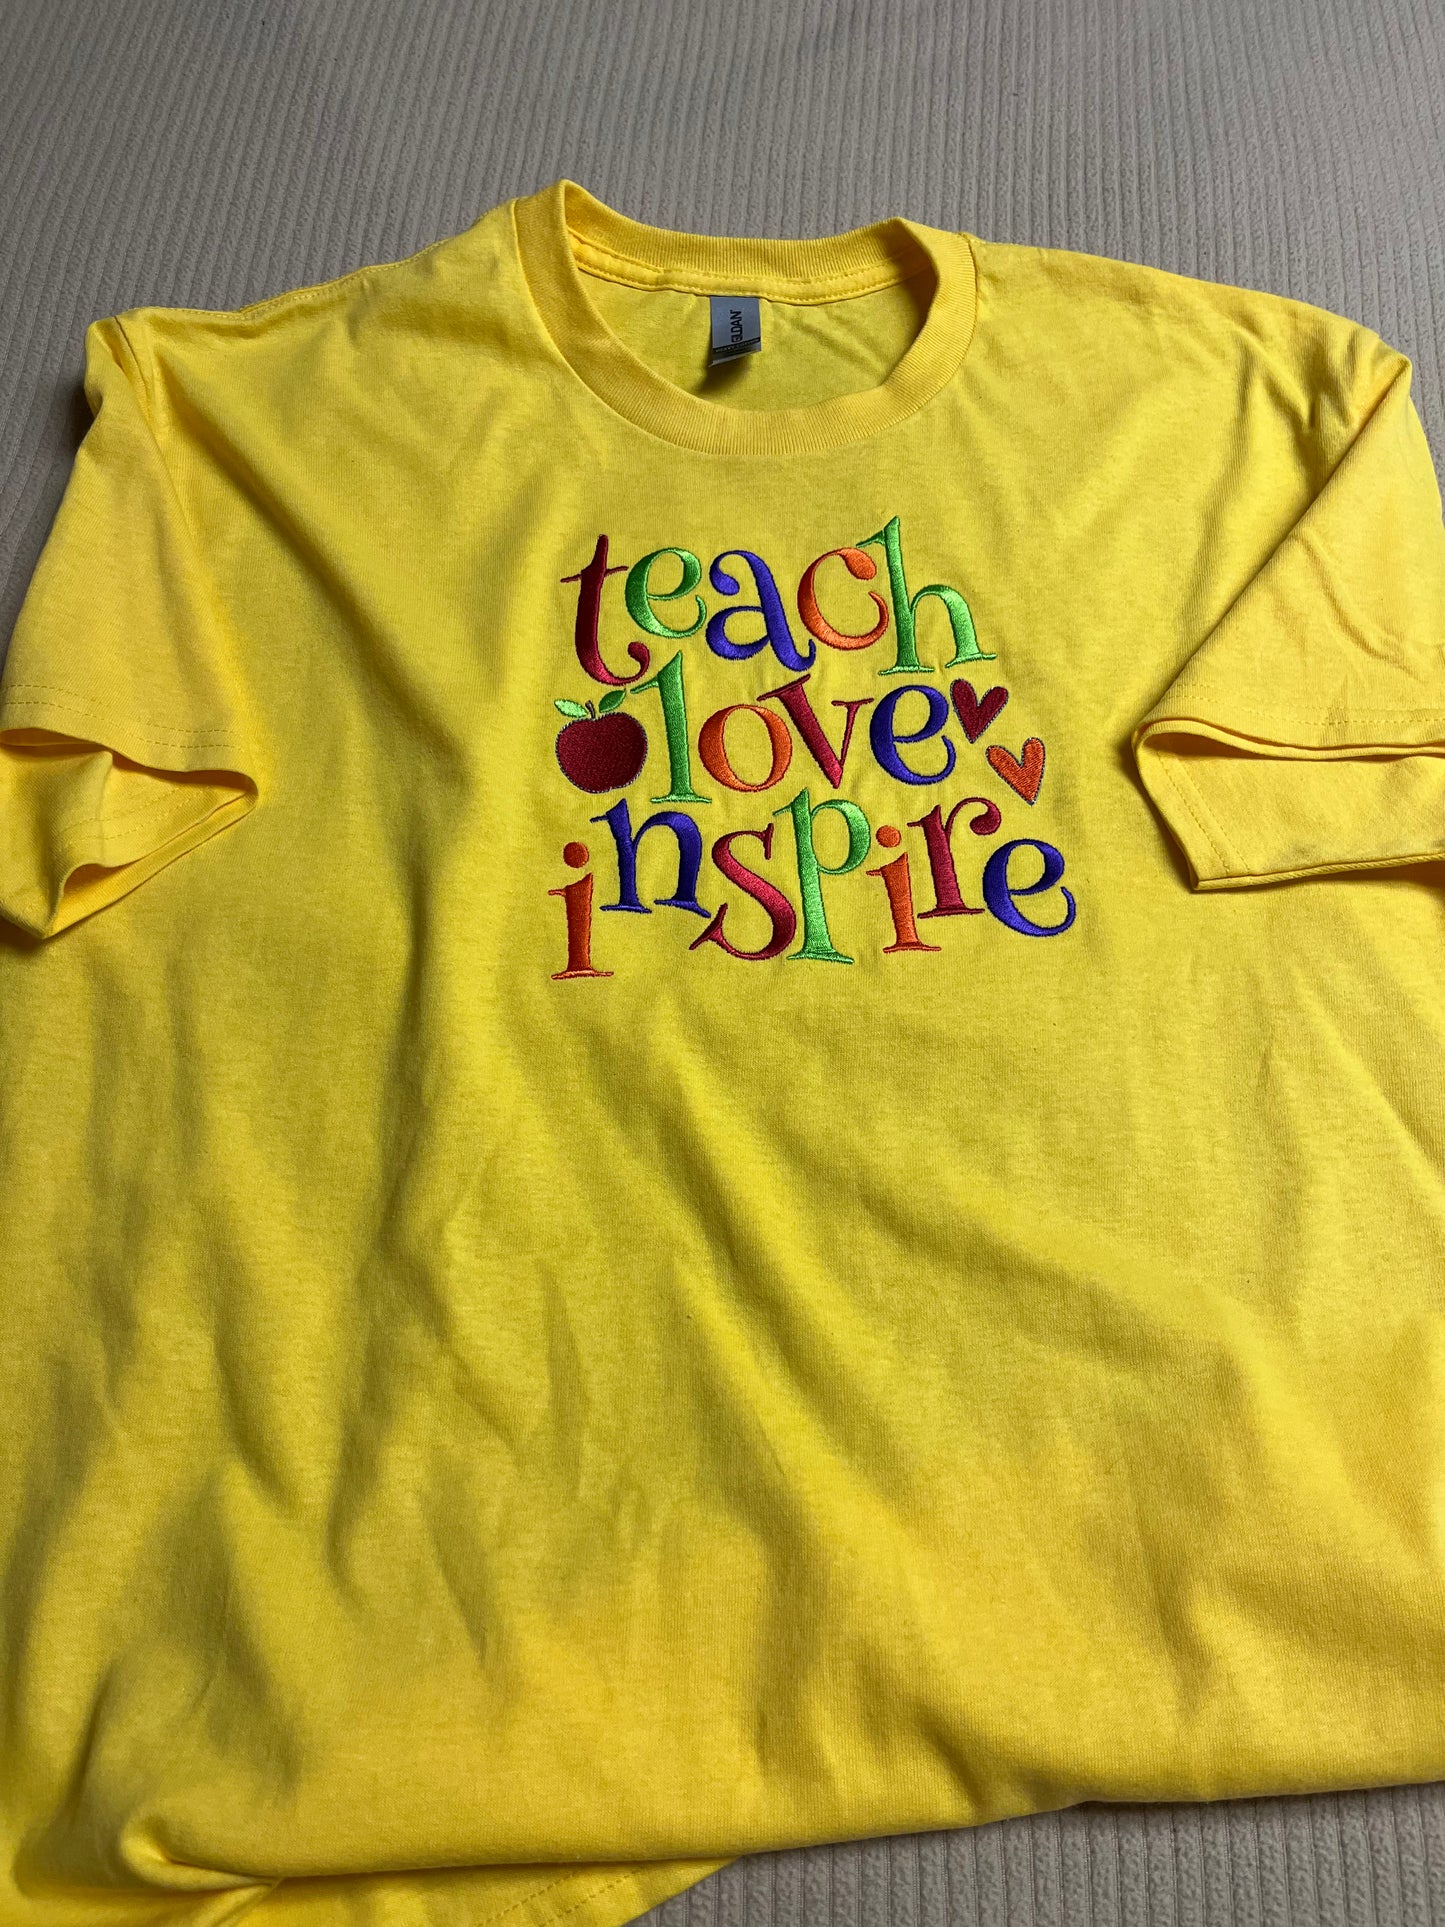 Teacher Gifts & School Fun!